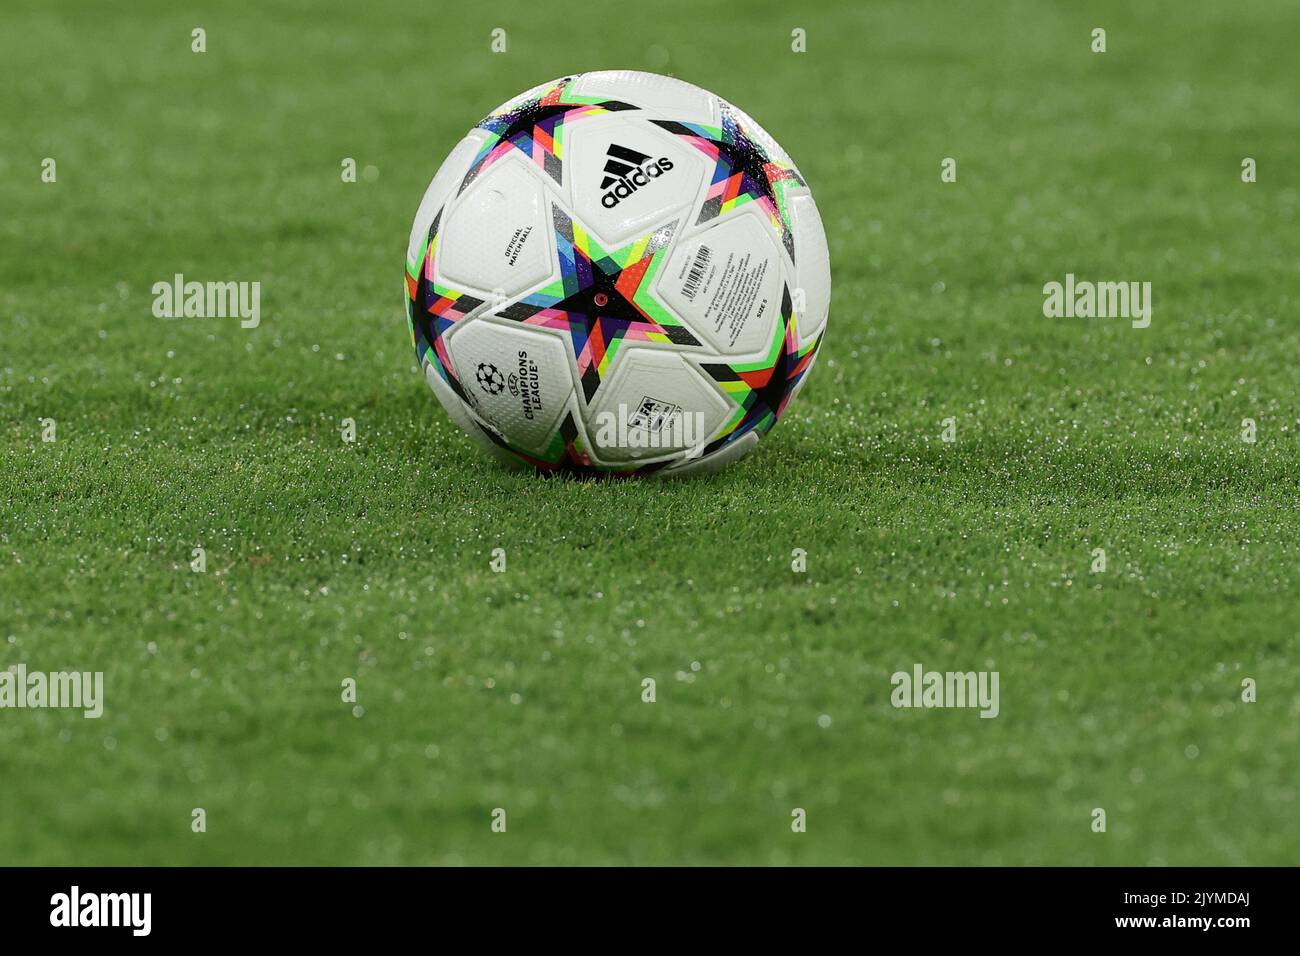 Adidas football adidas ball fotografías e imágenes de alta resolución -  Página 10 - Alamy